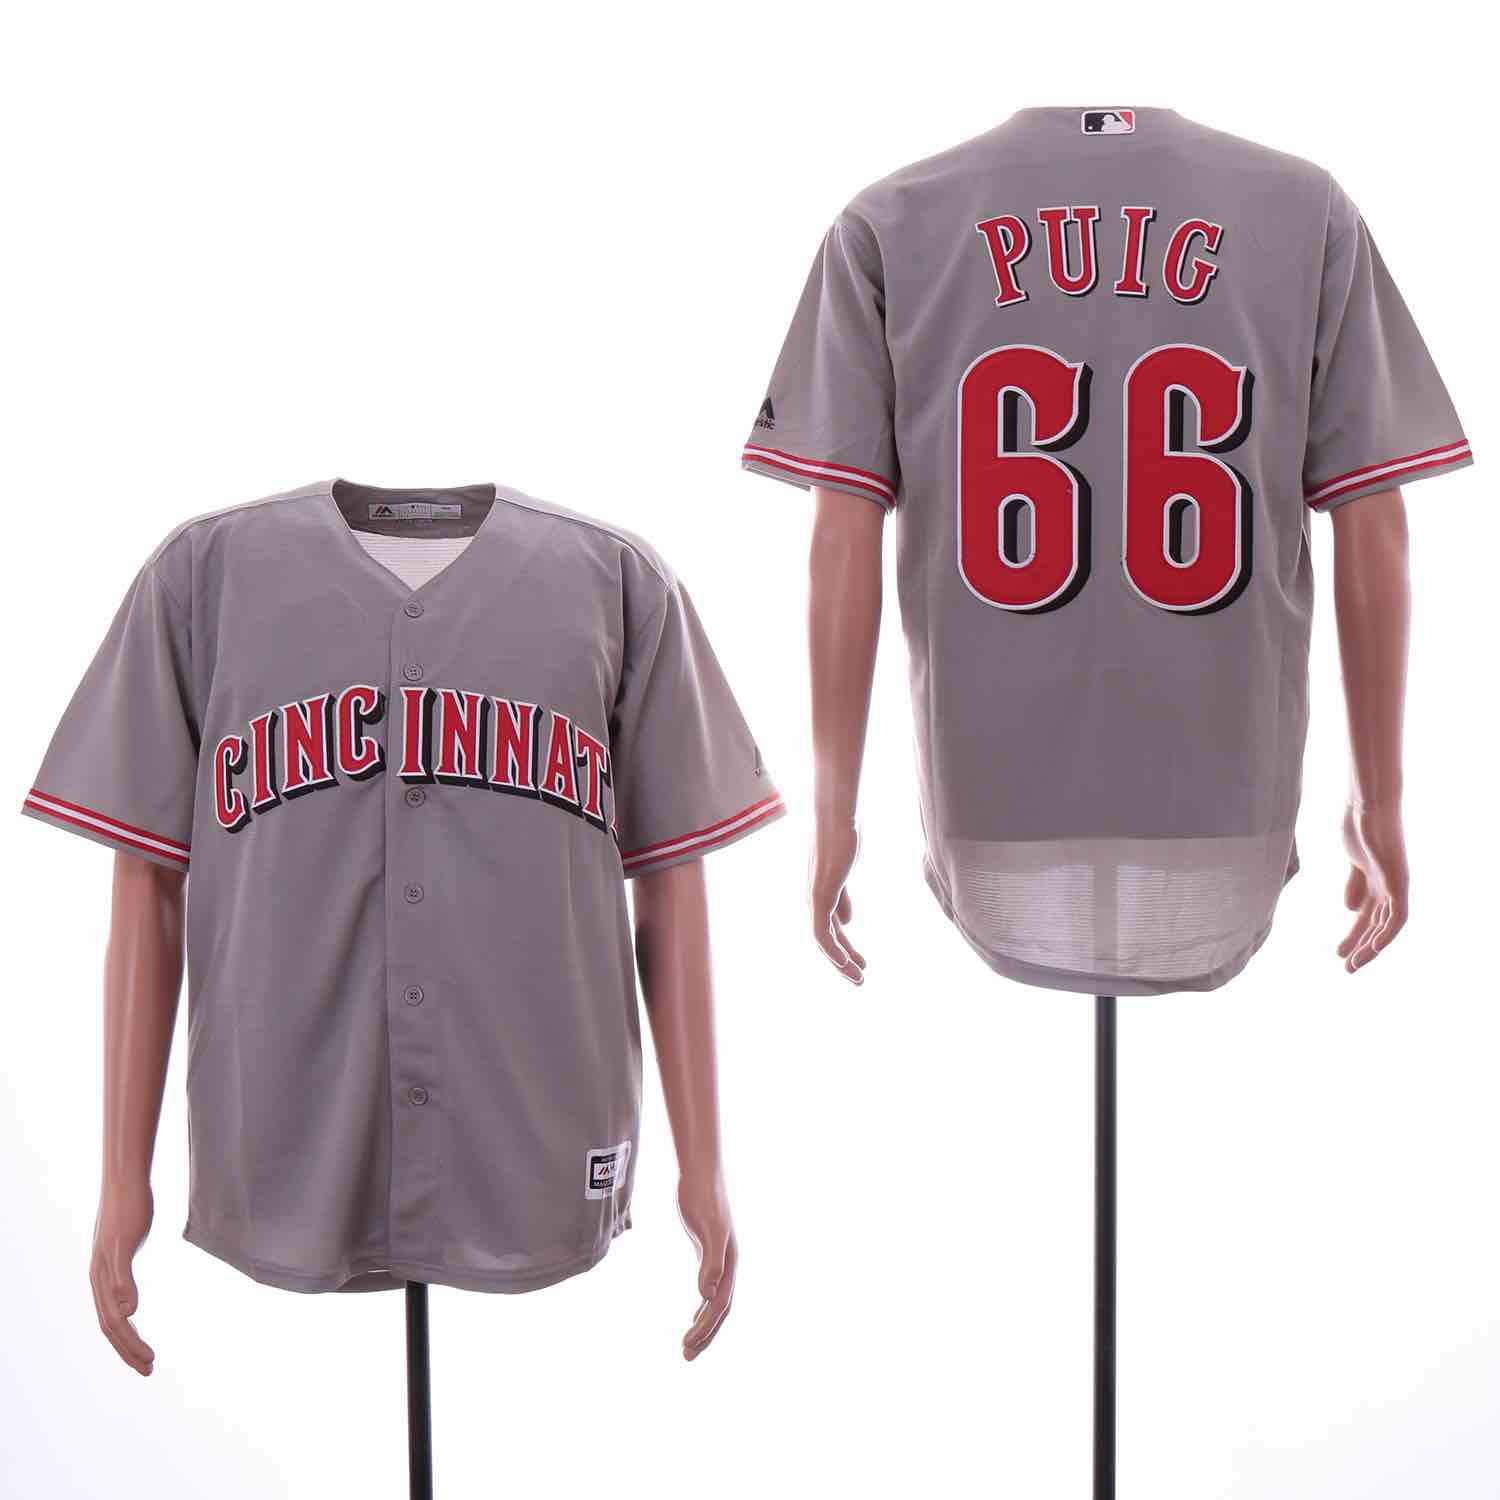 MLB Cincinnati Reds #66 Puig Grey Elite Jersey